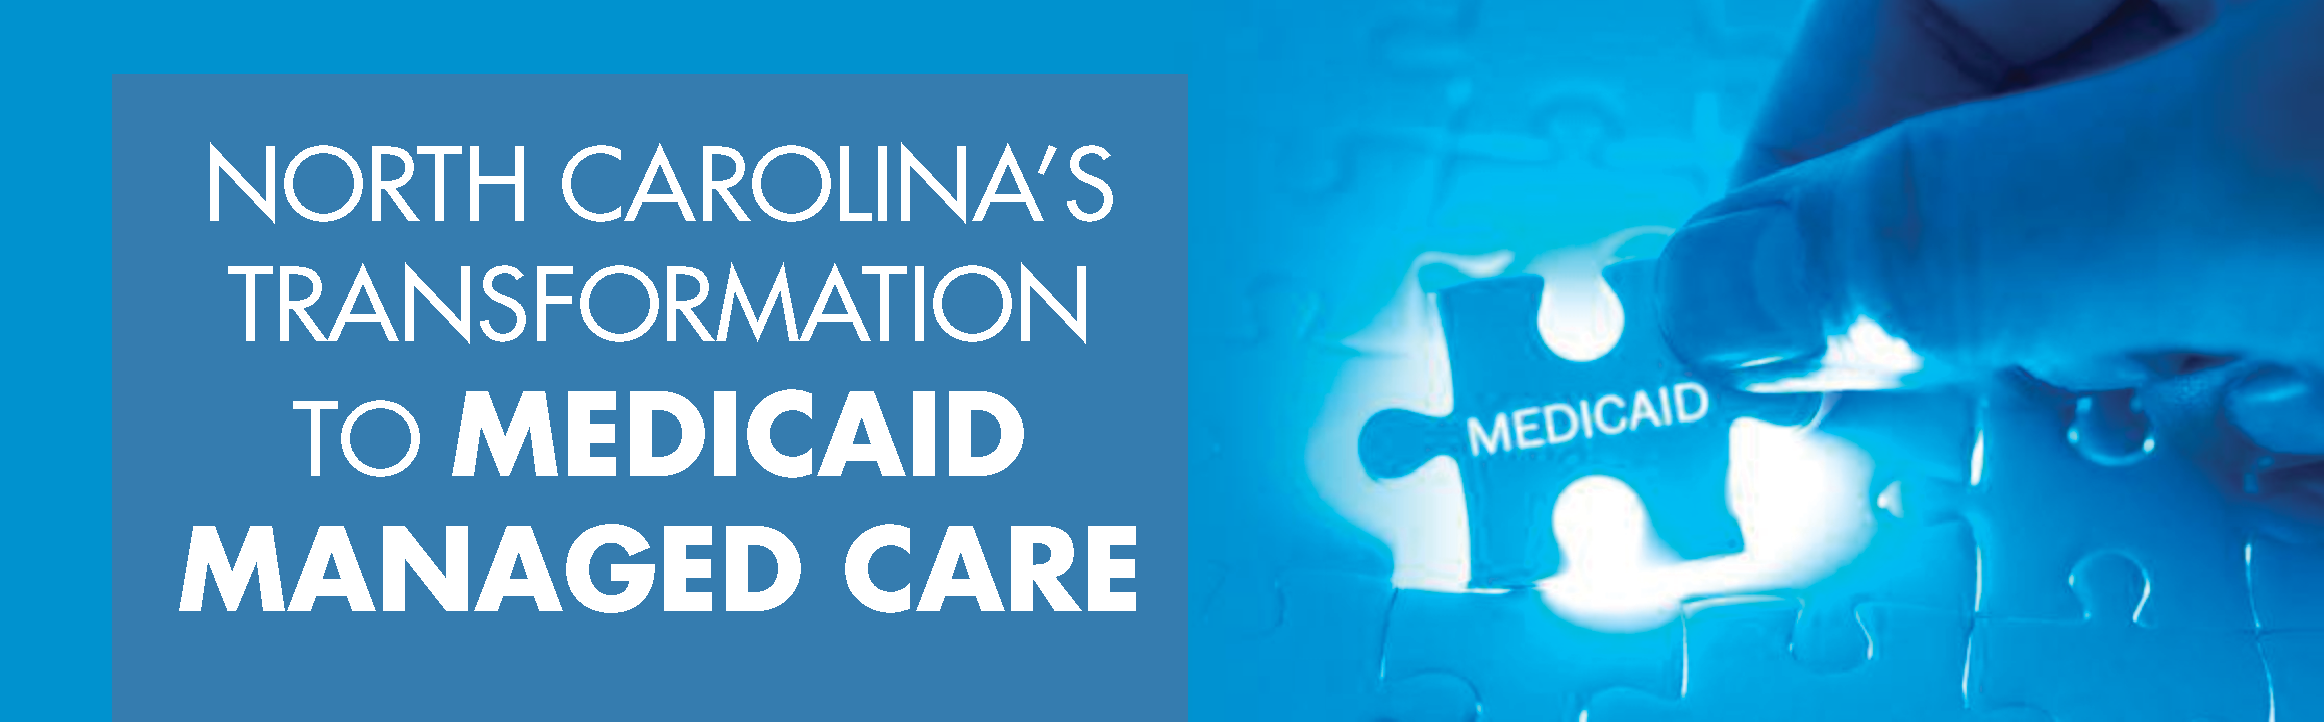 NCCDD Medicaid Managed Care header